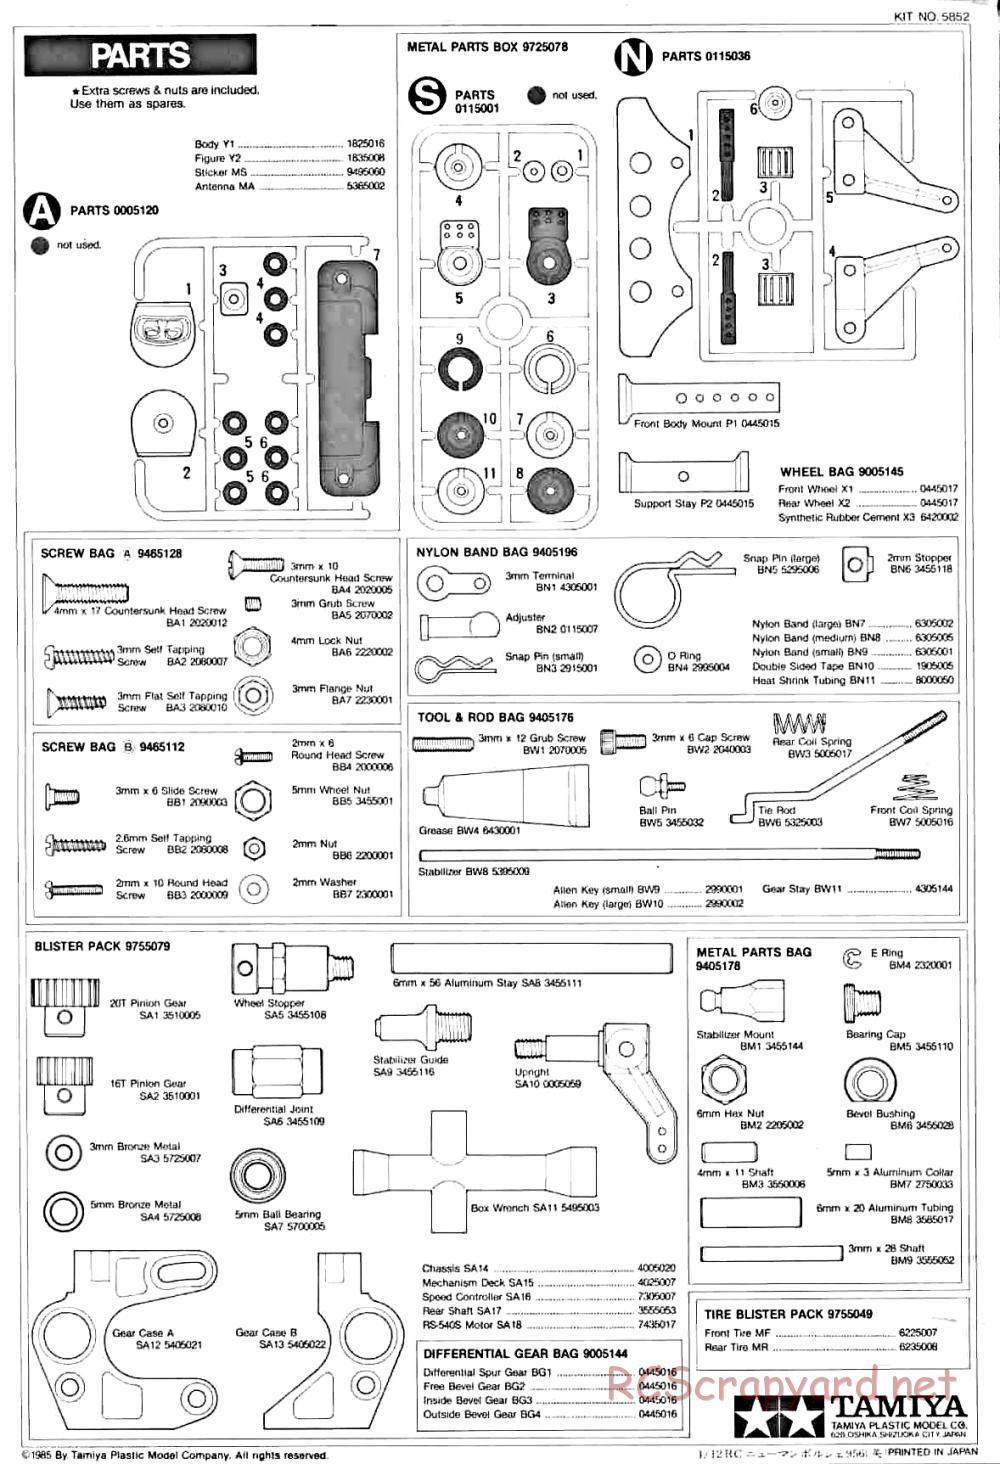 Tamiya - Newman Prsch 956 - RM MK.7 - 58052 - Manual - Page 17